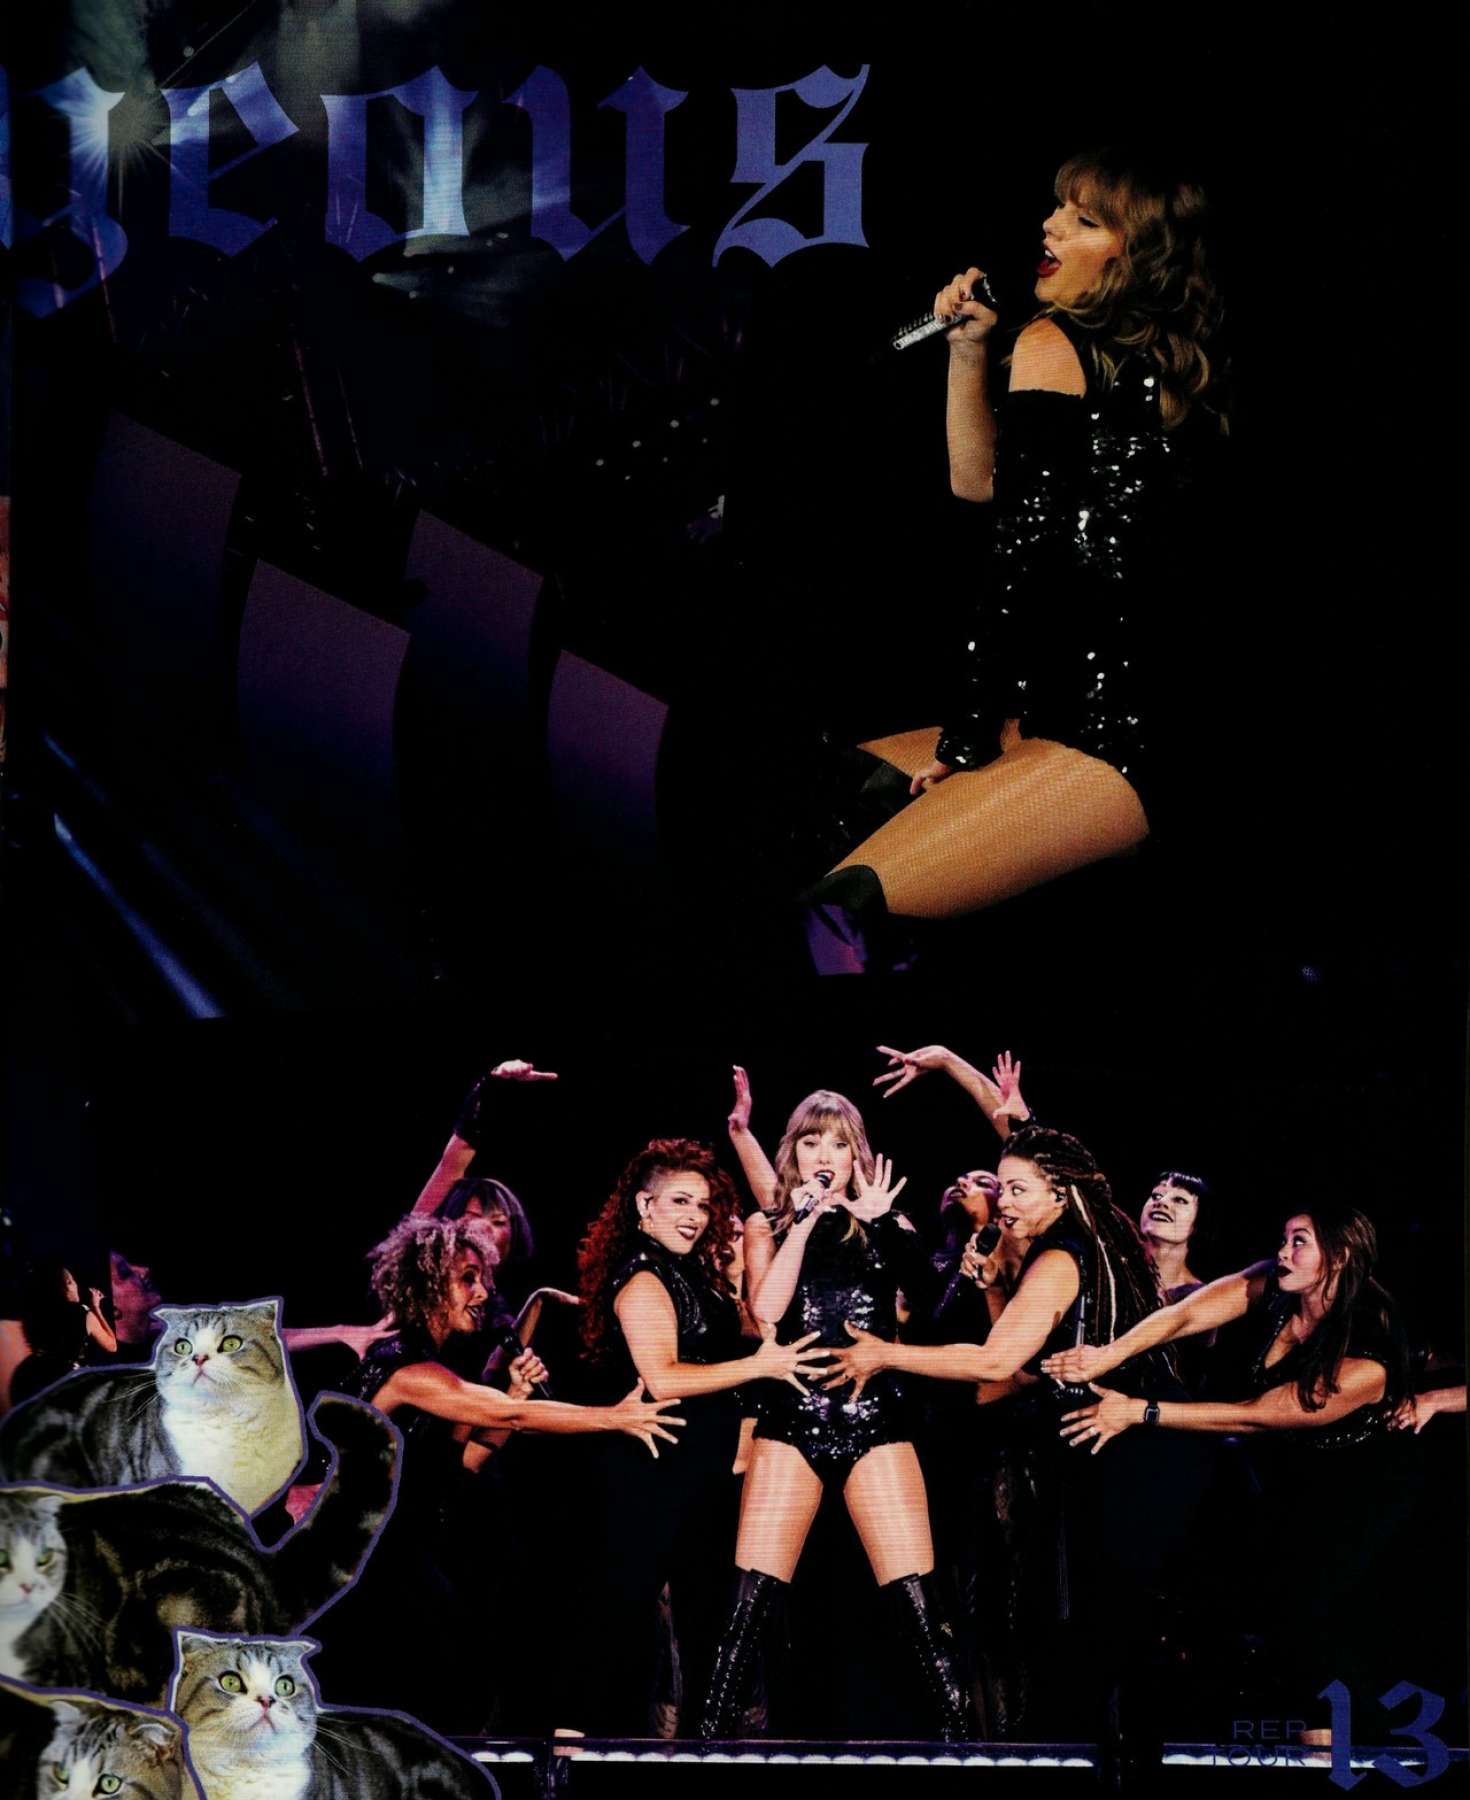 Taylor Swift â€“ Reputation Tour Book 2018